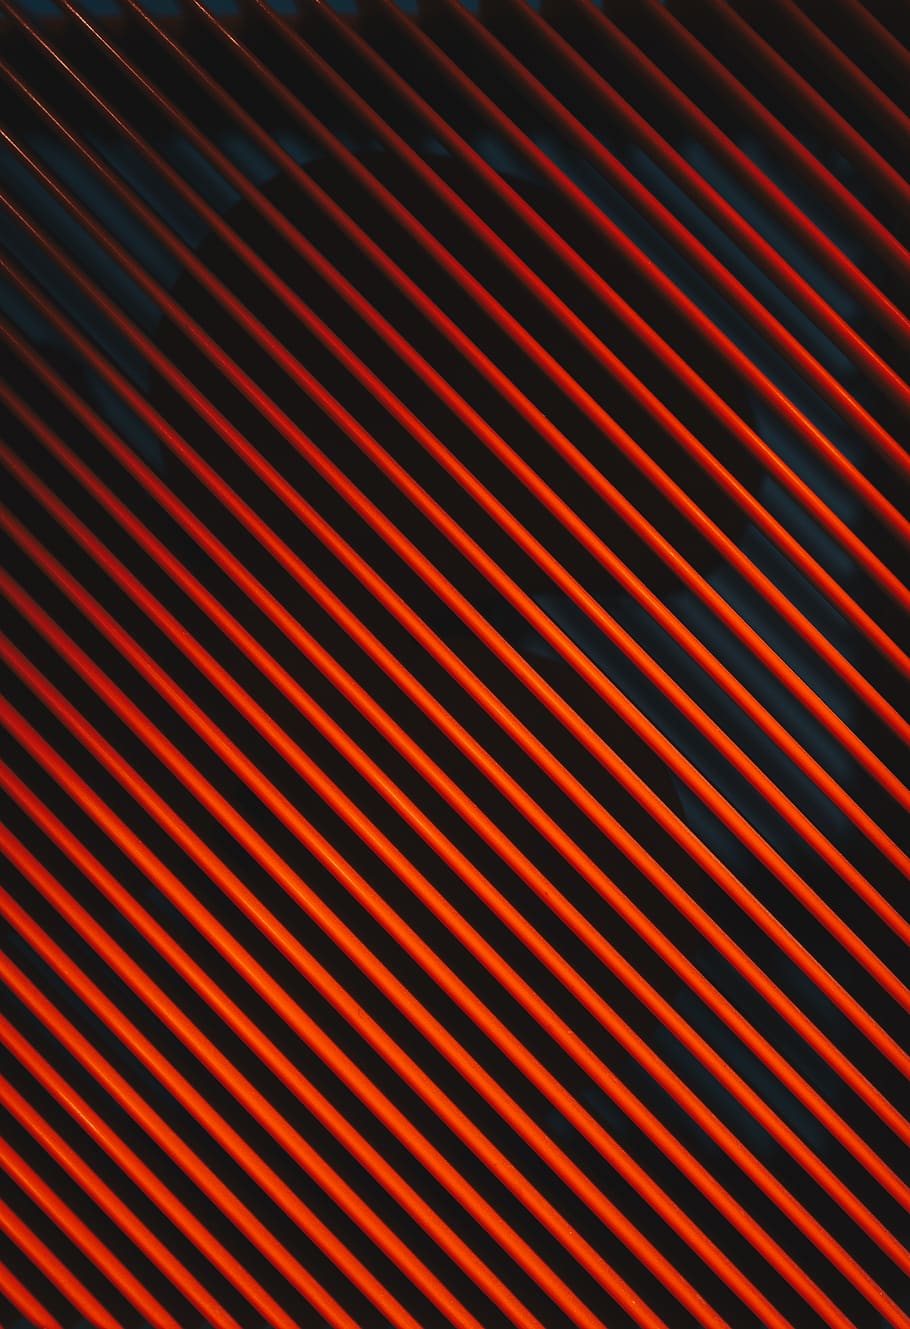 Red Diagonal Stripes, art, background, colors, contemporary, design